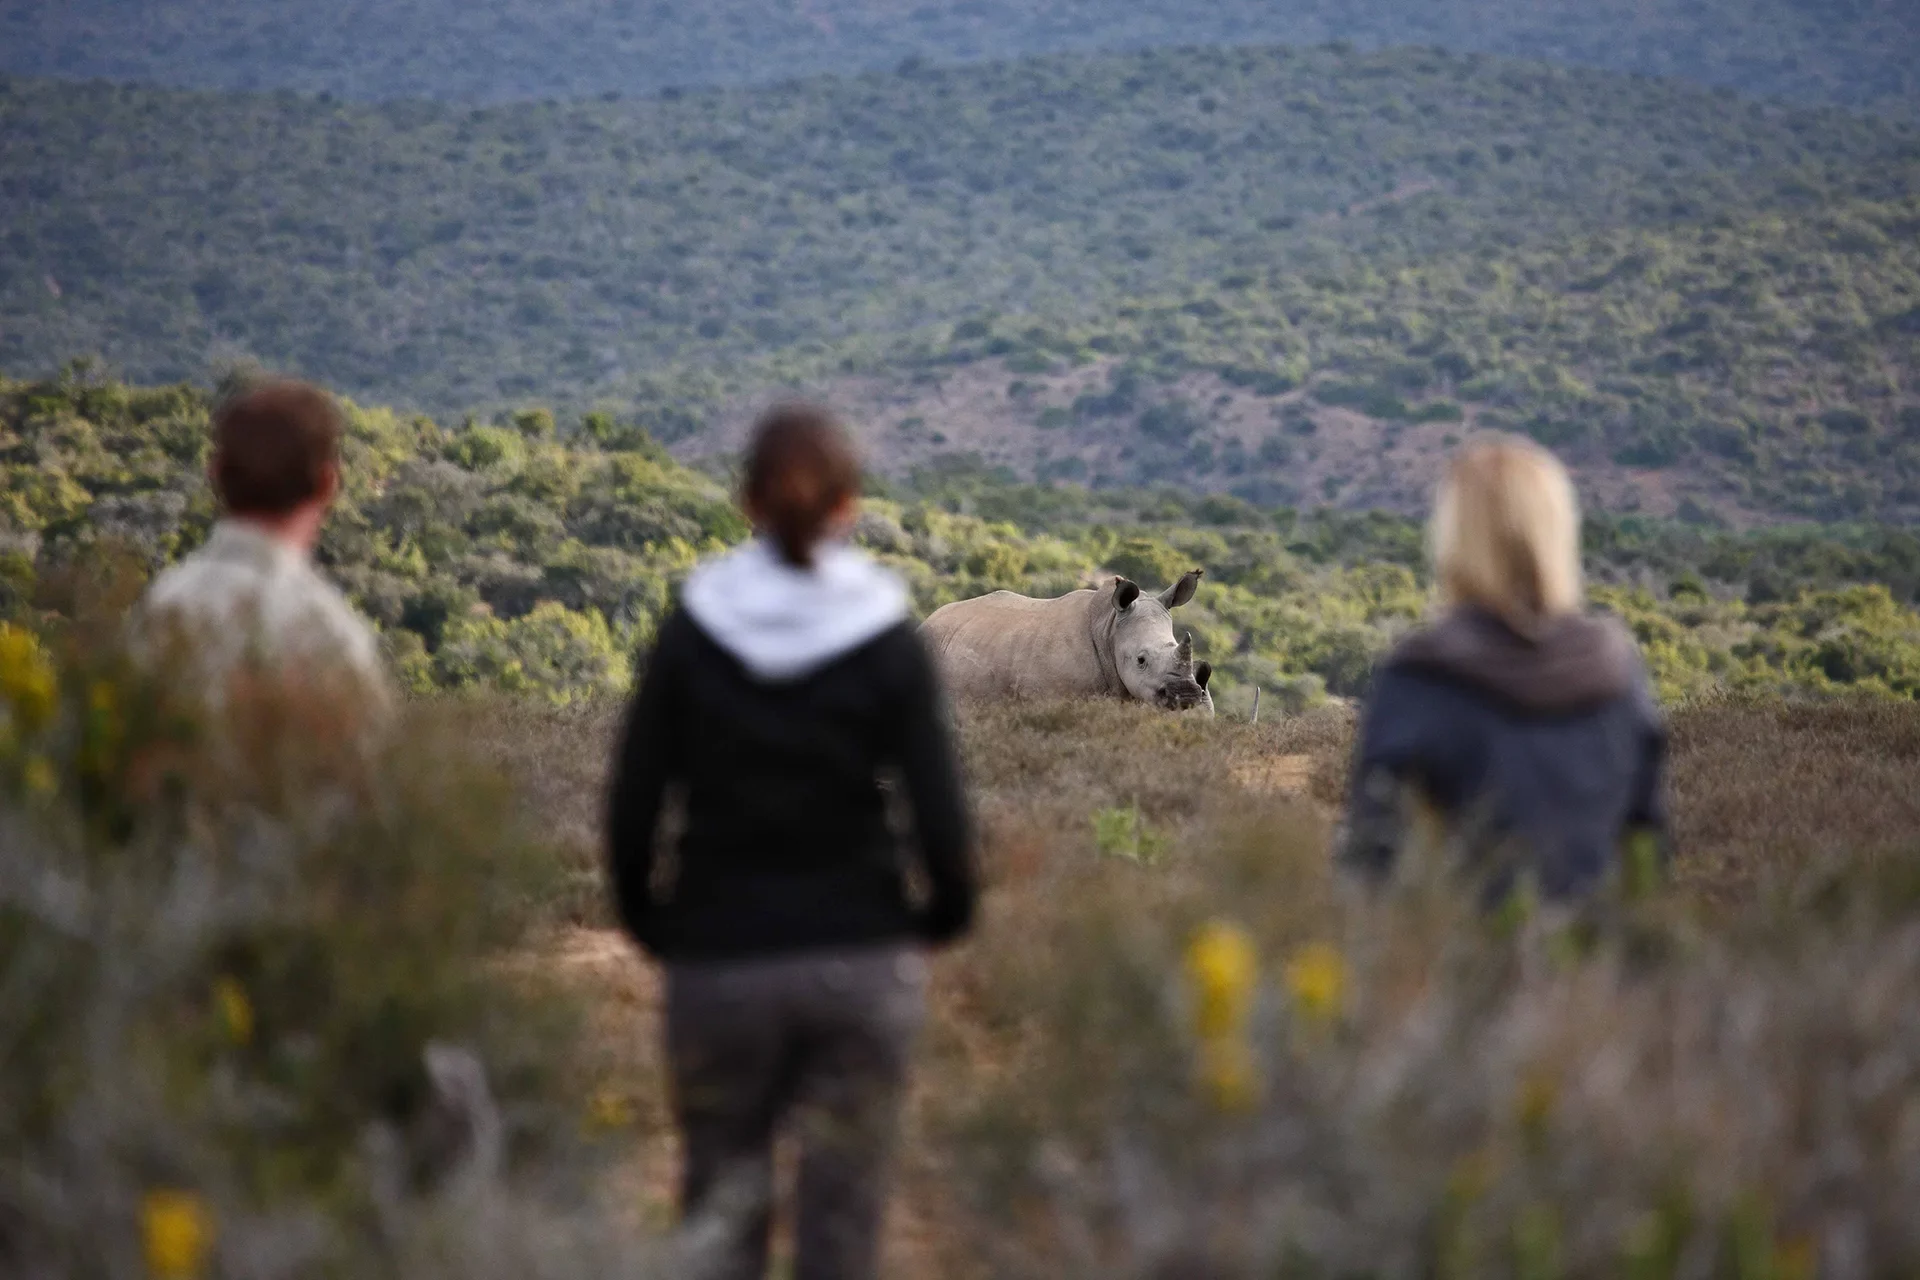 Großes Nashorn angesichts dreier Personen